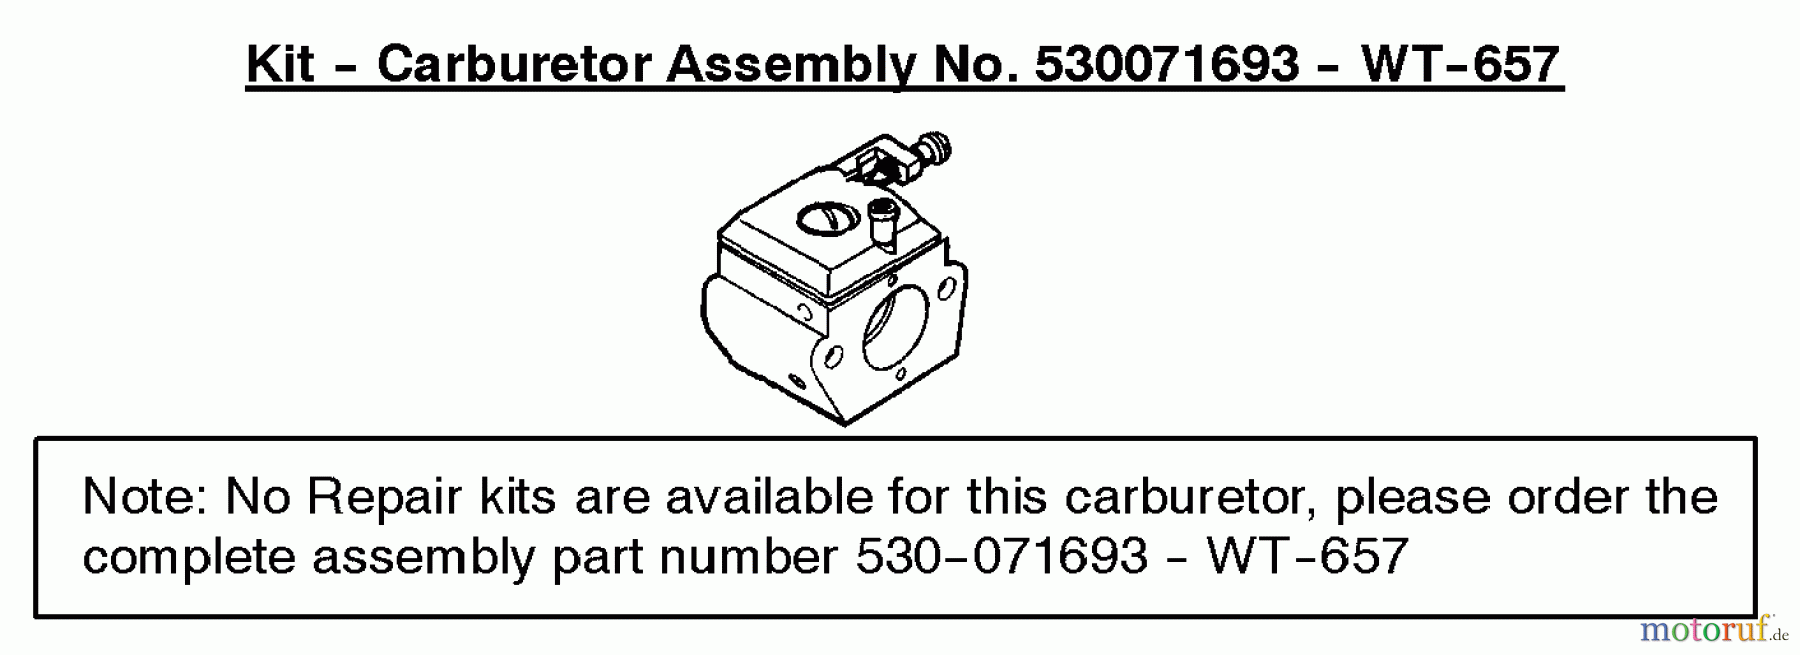  Poulan / Weed Eater Motorsägen PP295 (Type 1) - Poulan Pro Chainsaw Carburetor Assembly Kit - (WT-657) 530071693